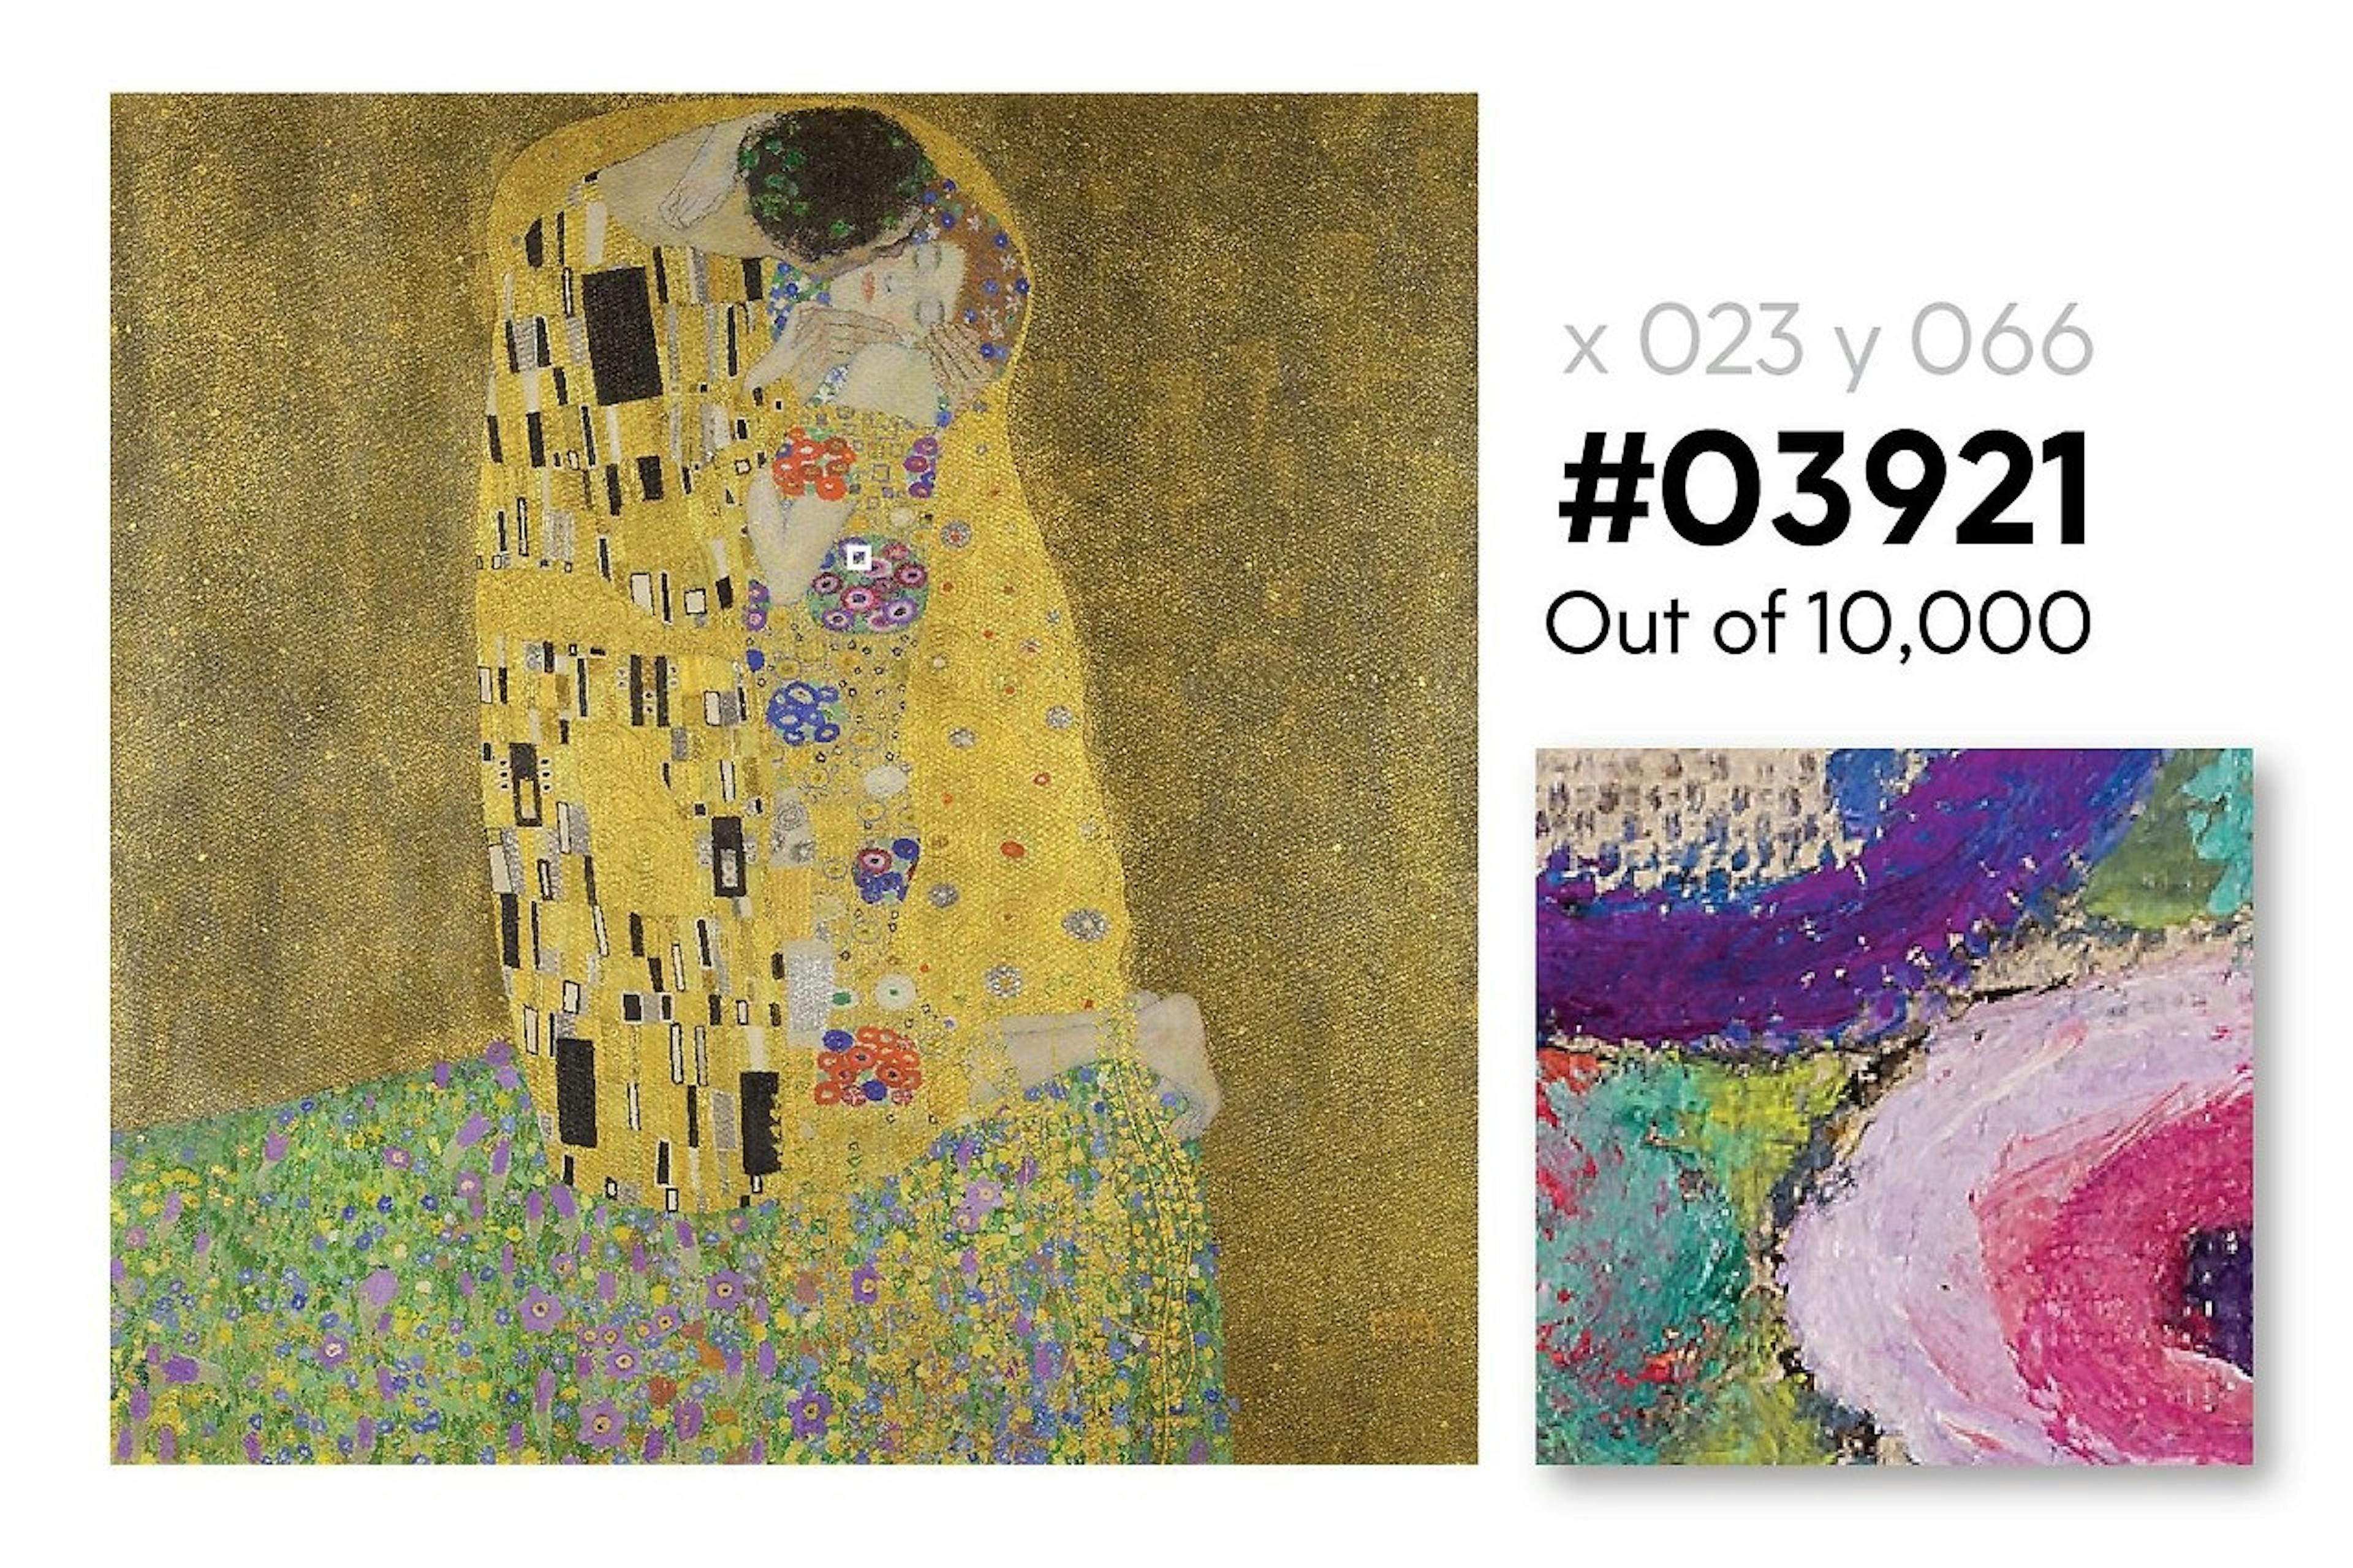 NFT the Kiss by Gustav Klimt #03921